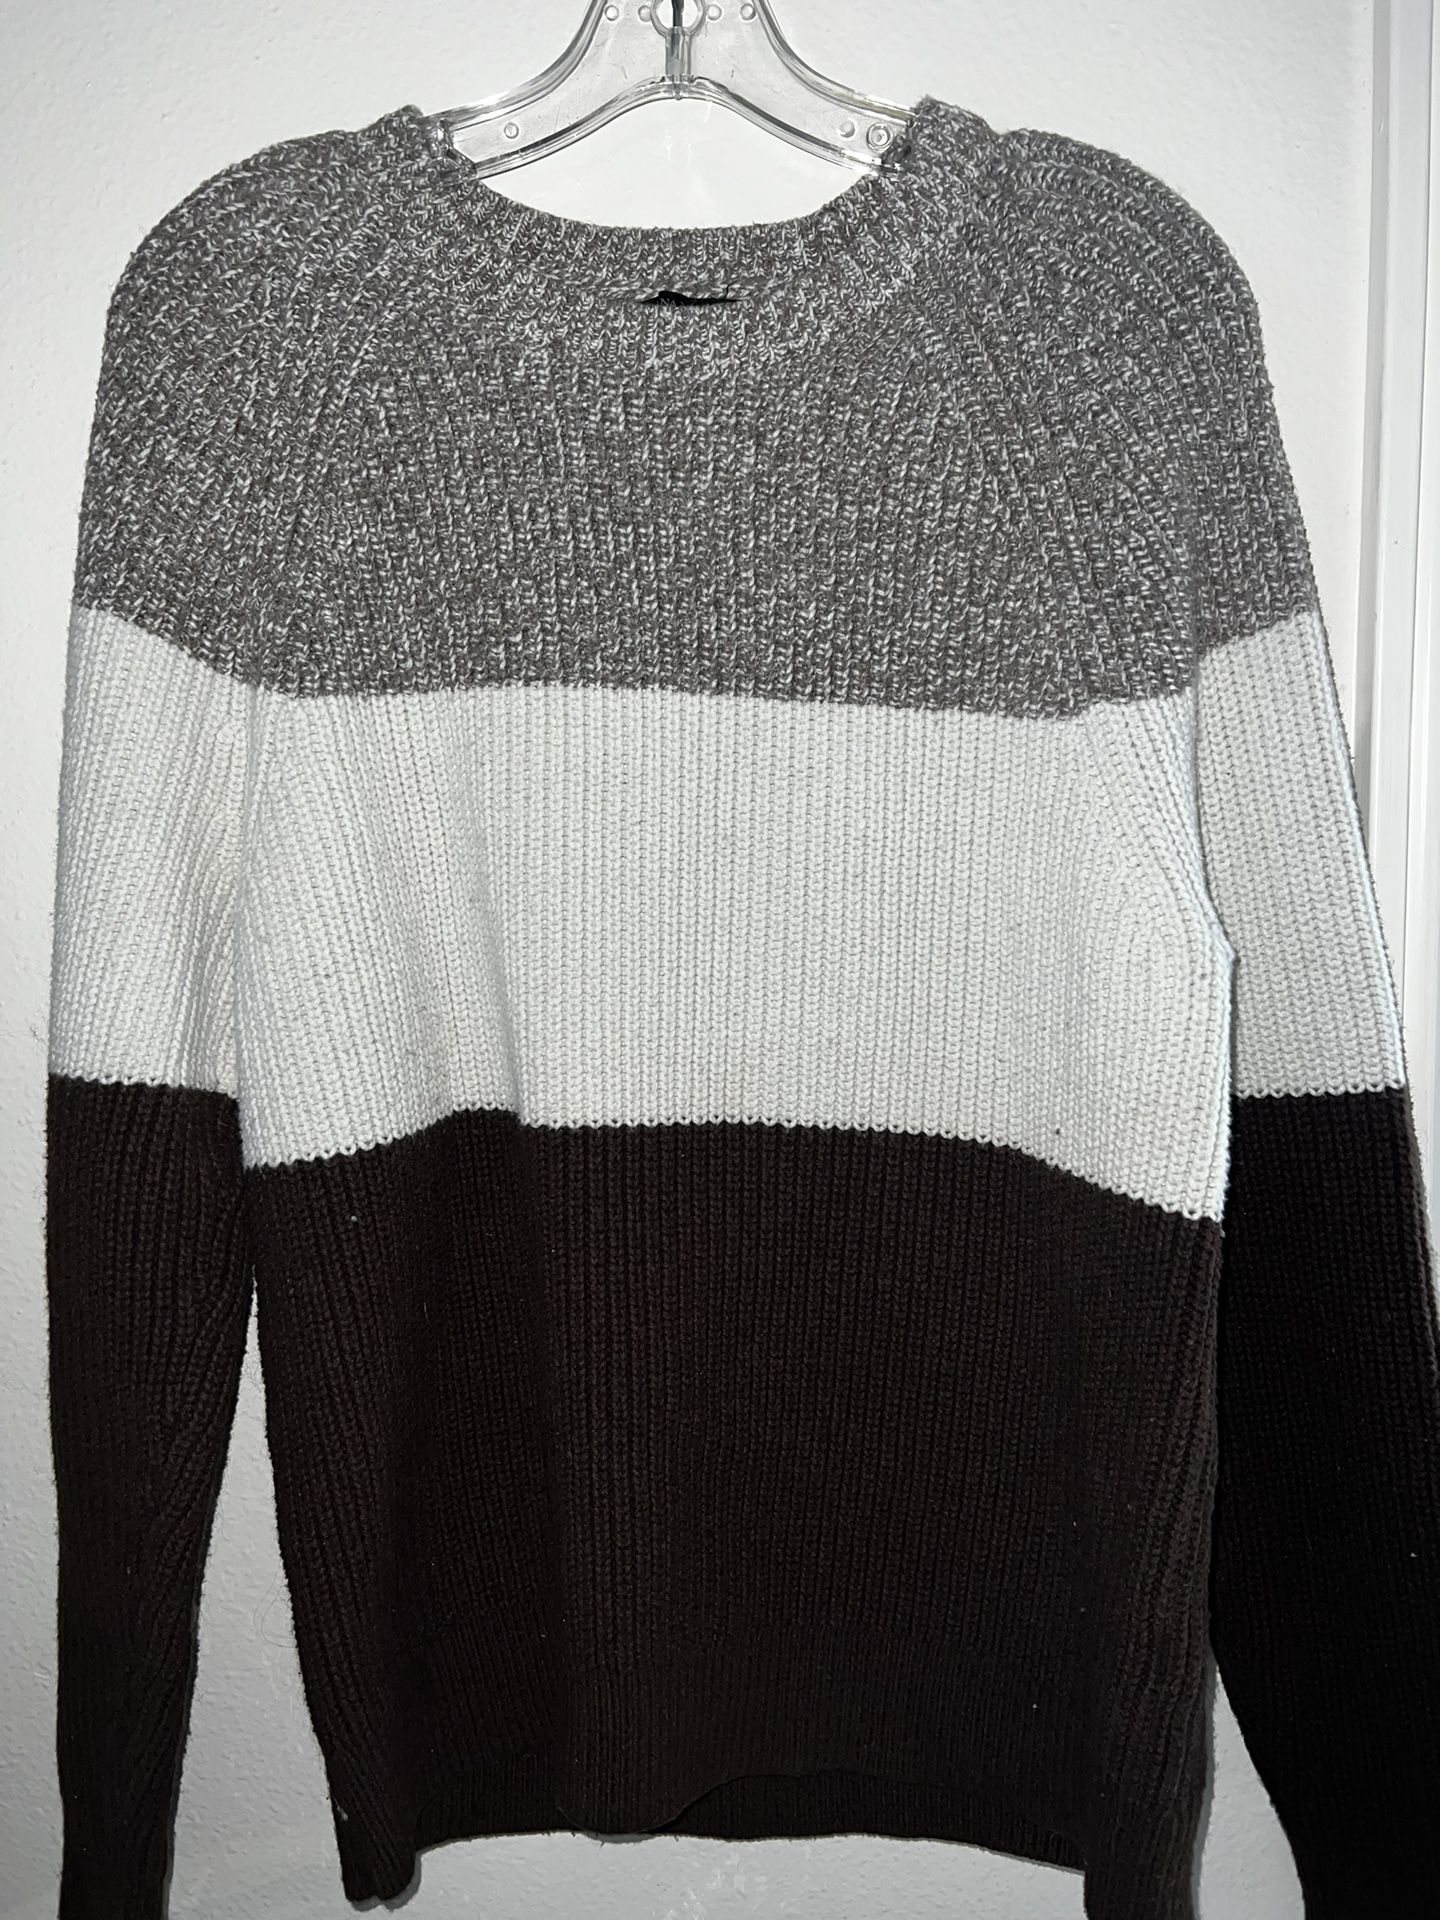 Banana Republic Colorblock Sweater Black Marled Charcoal Gray Xl